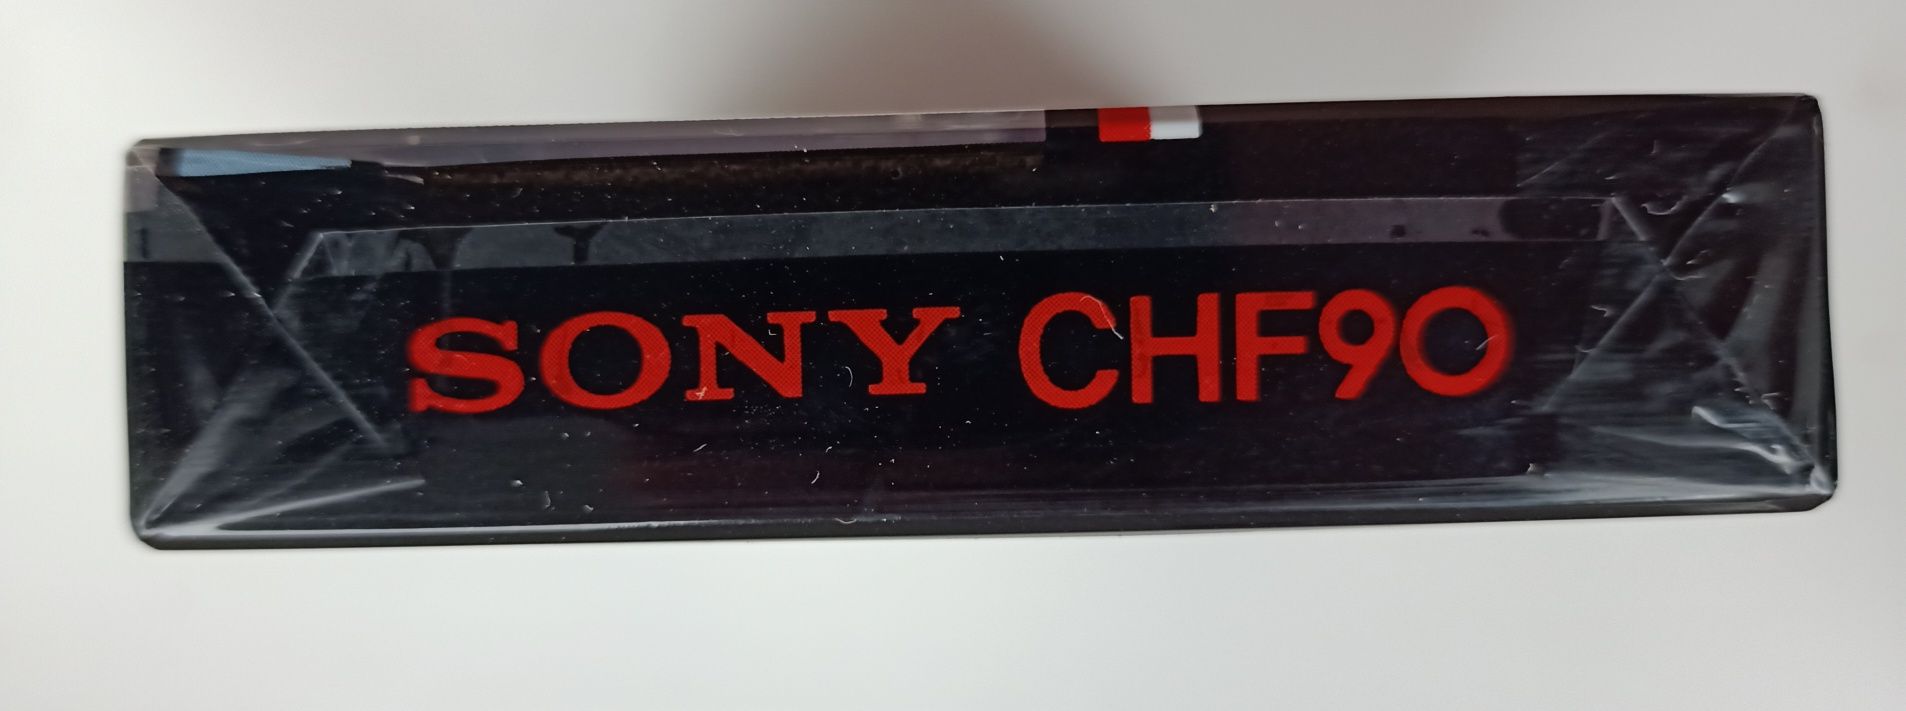 Редкая винтажная кассета SONY CHF 90 Japan Denon Agfa Basf